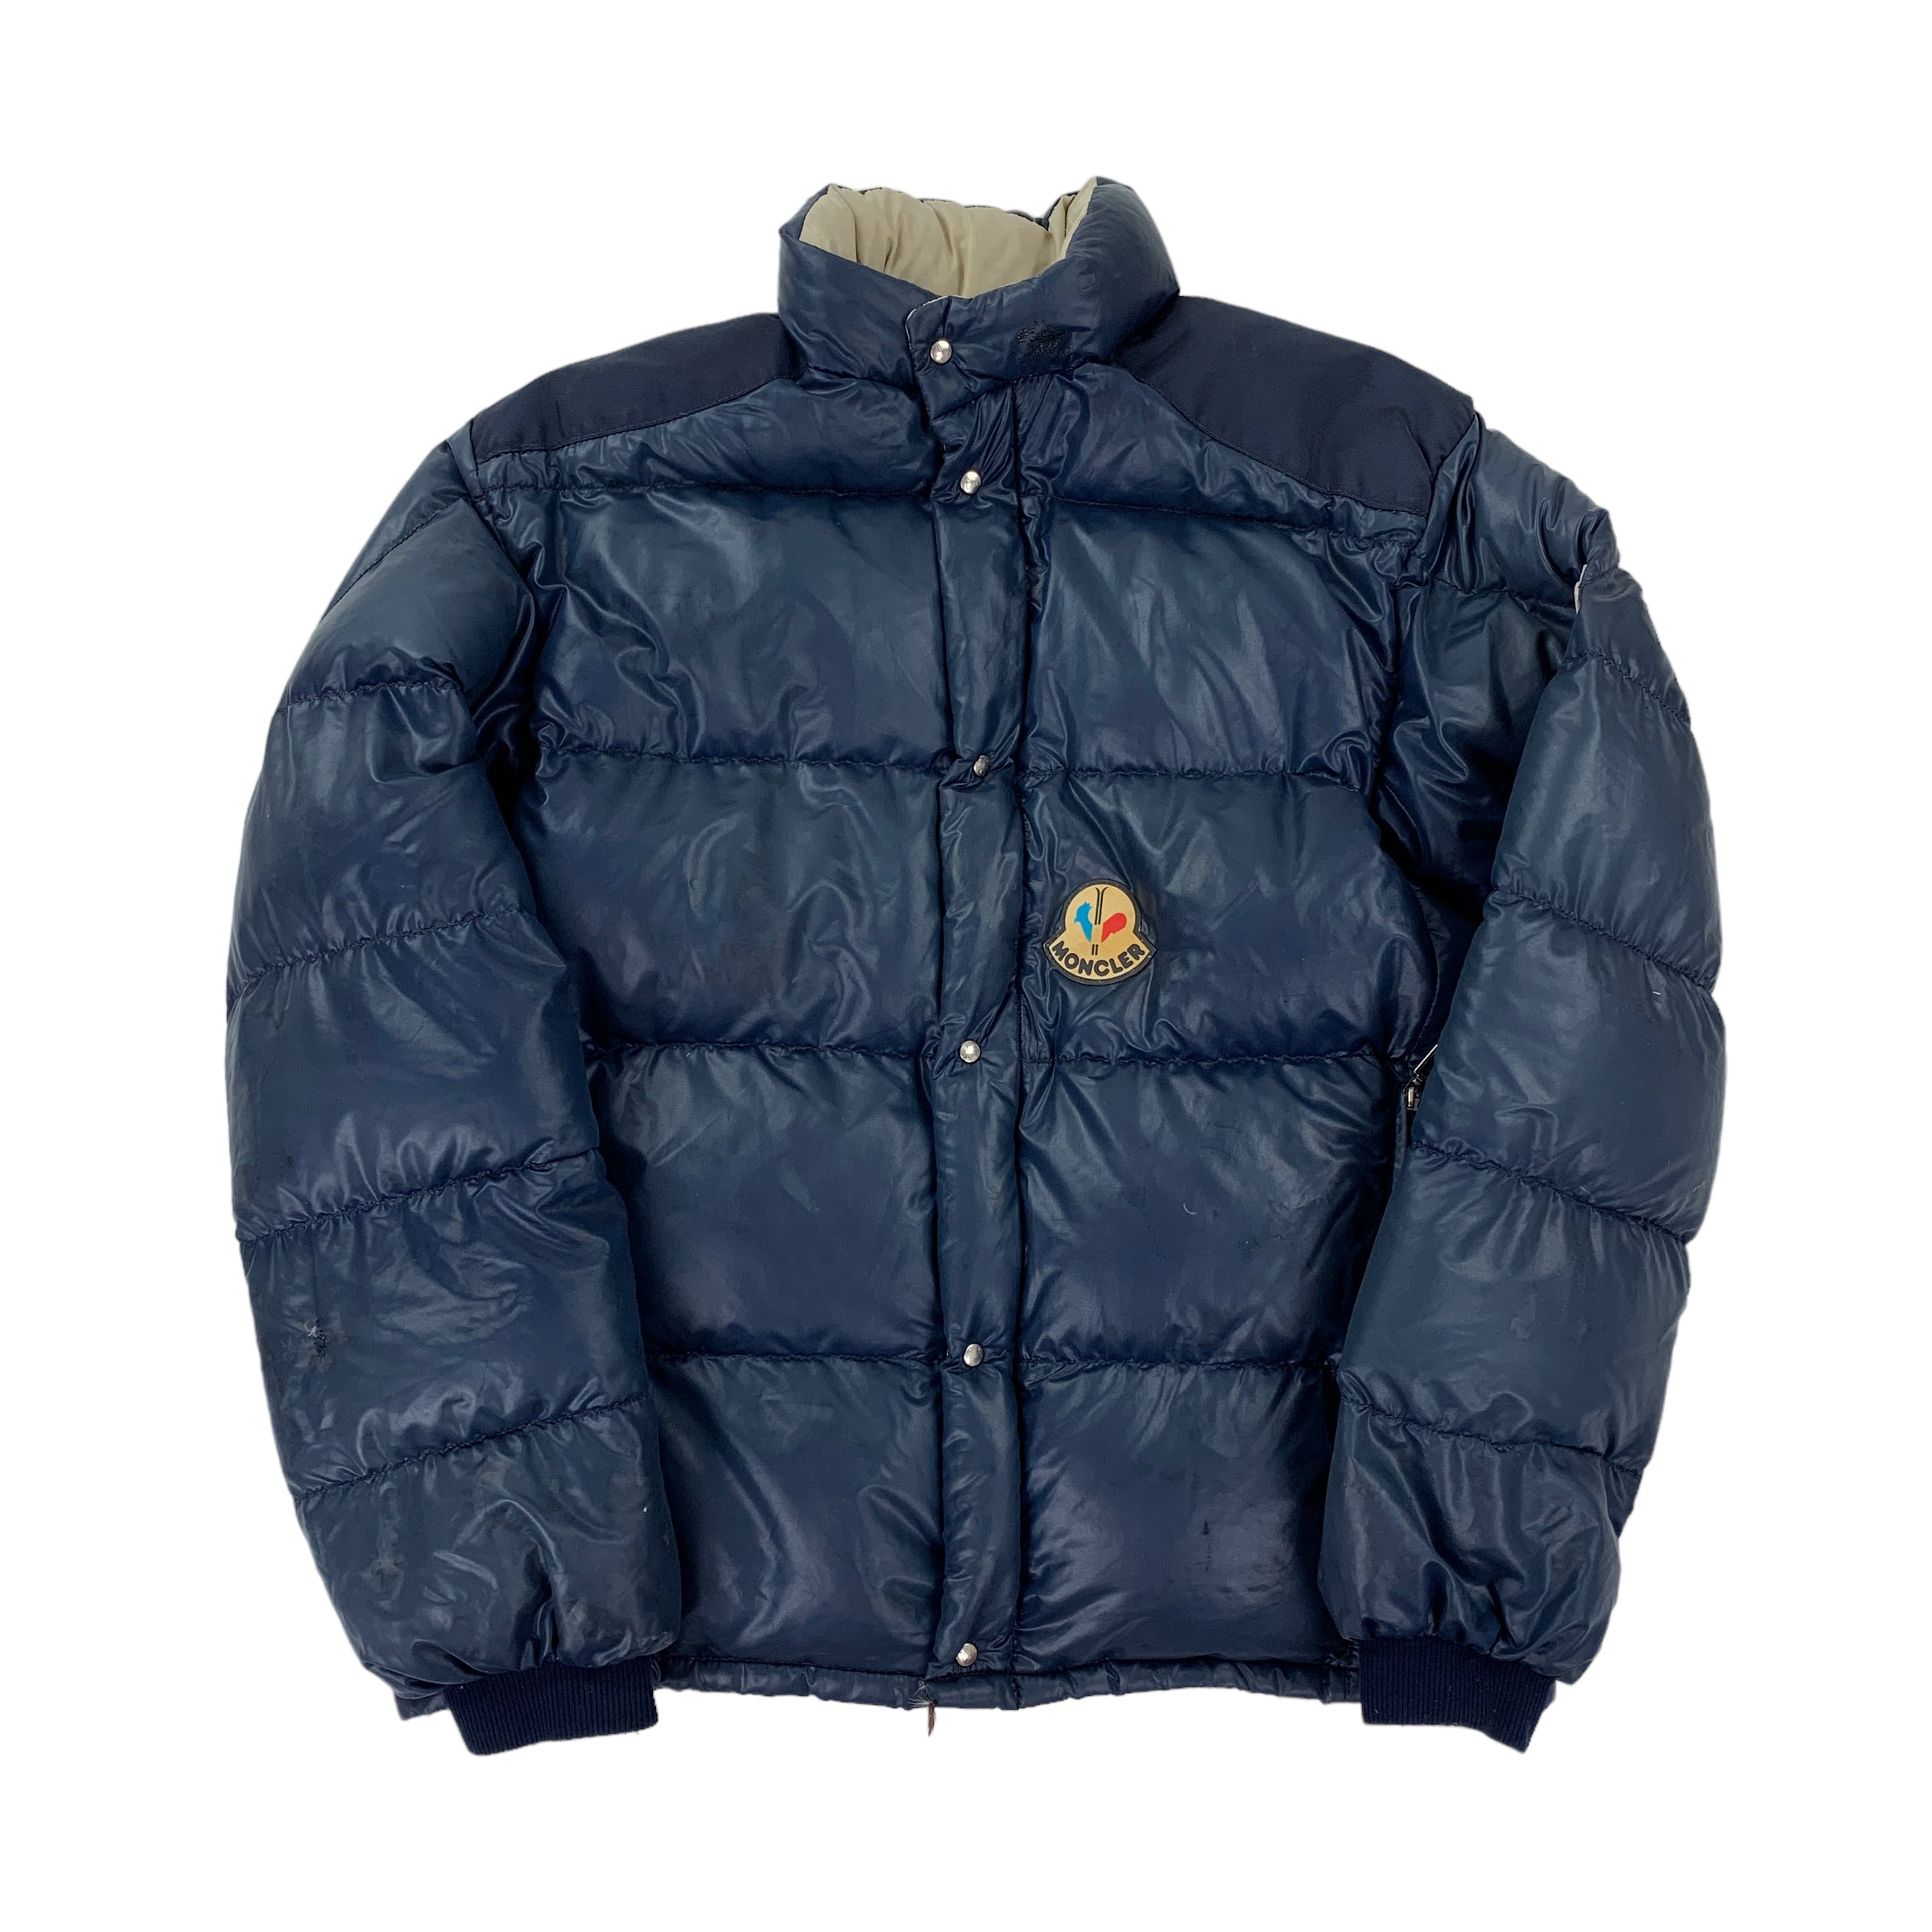 PUFFER SEASON - Your Winter Jacket Supplier. Premium Down Coats